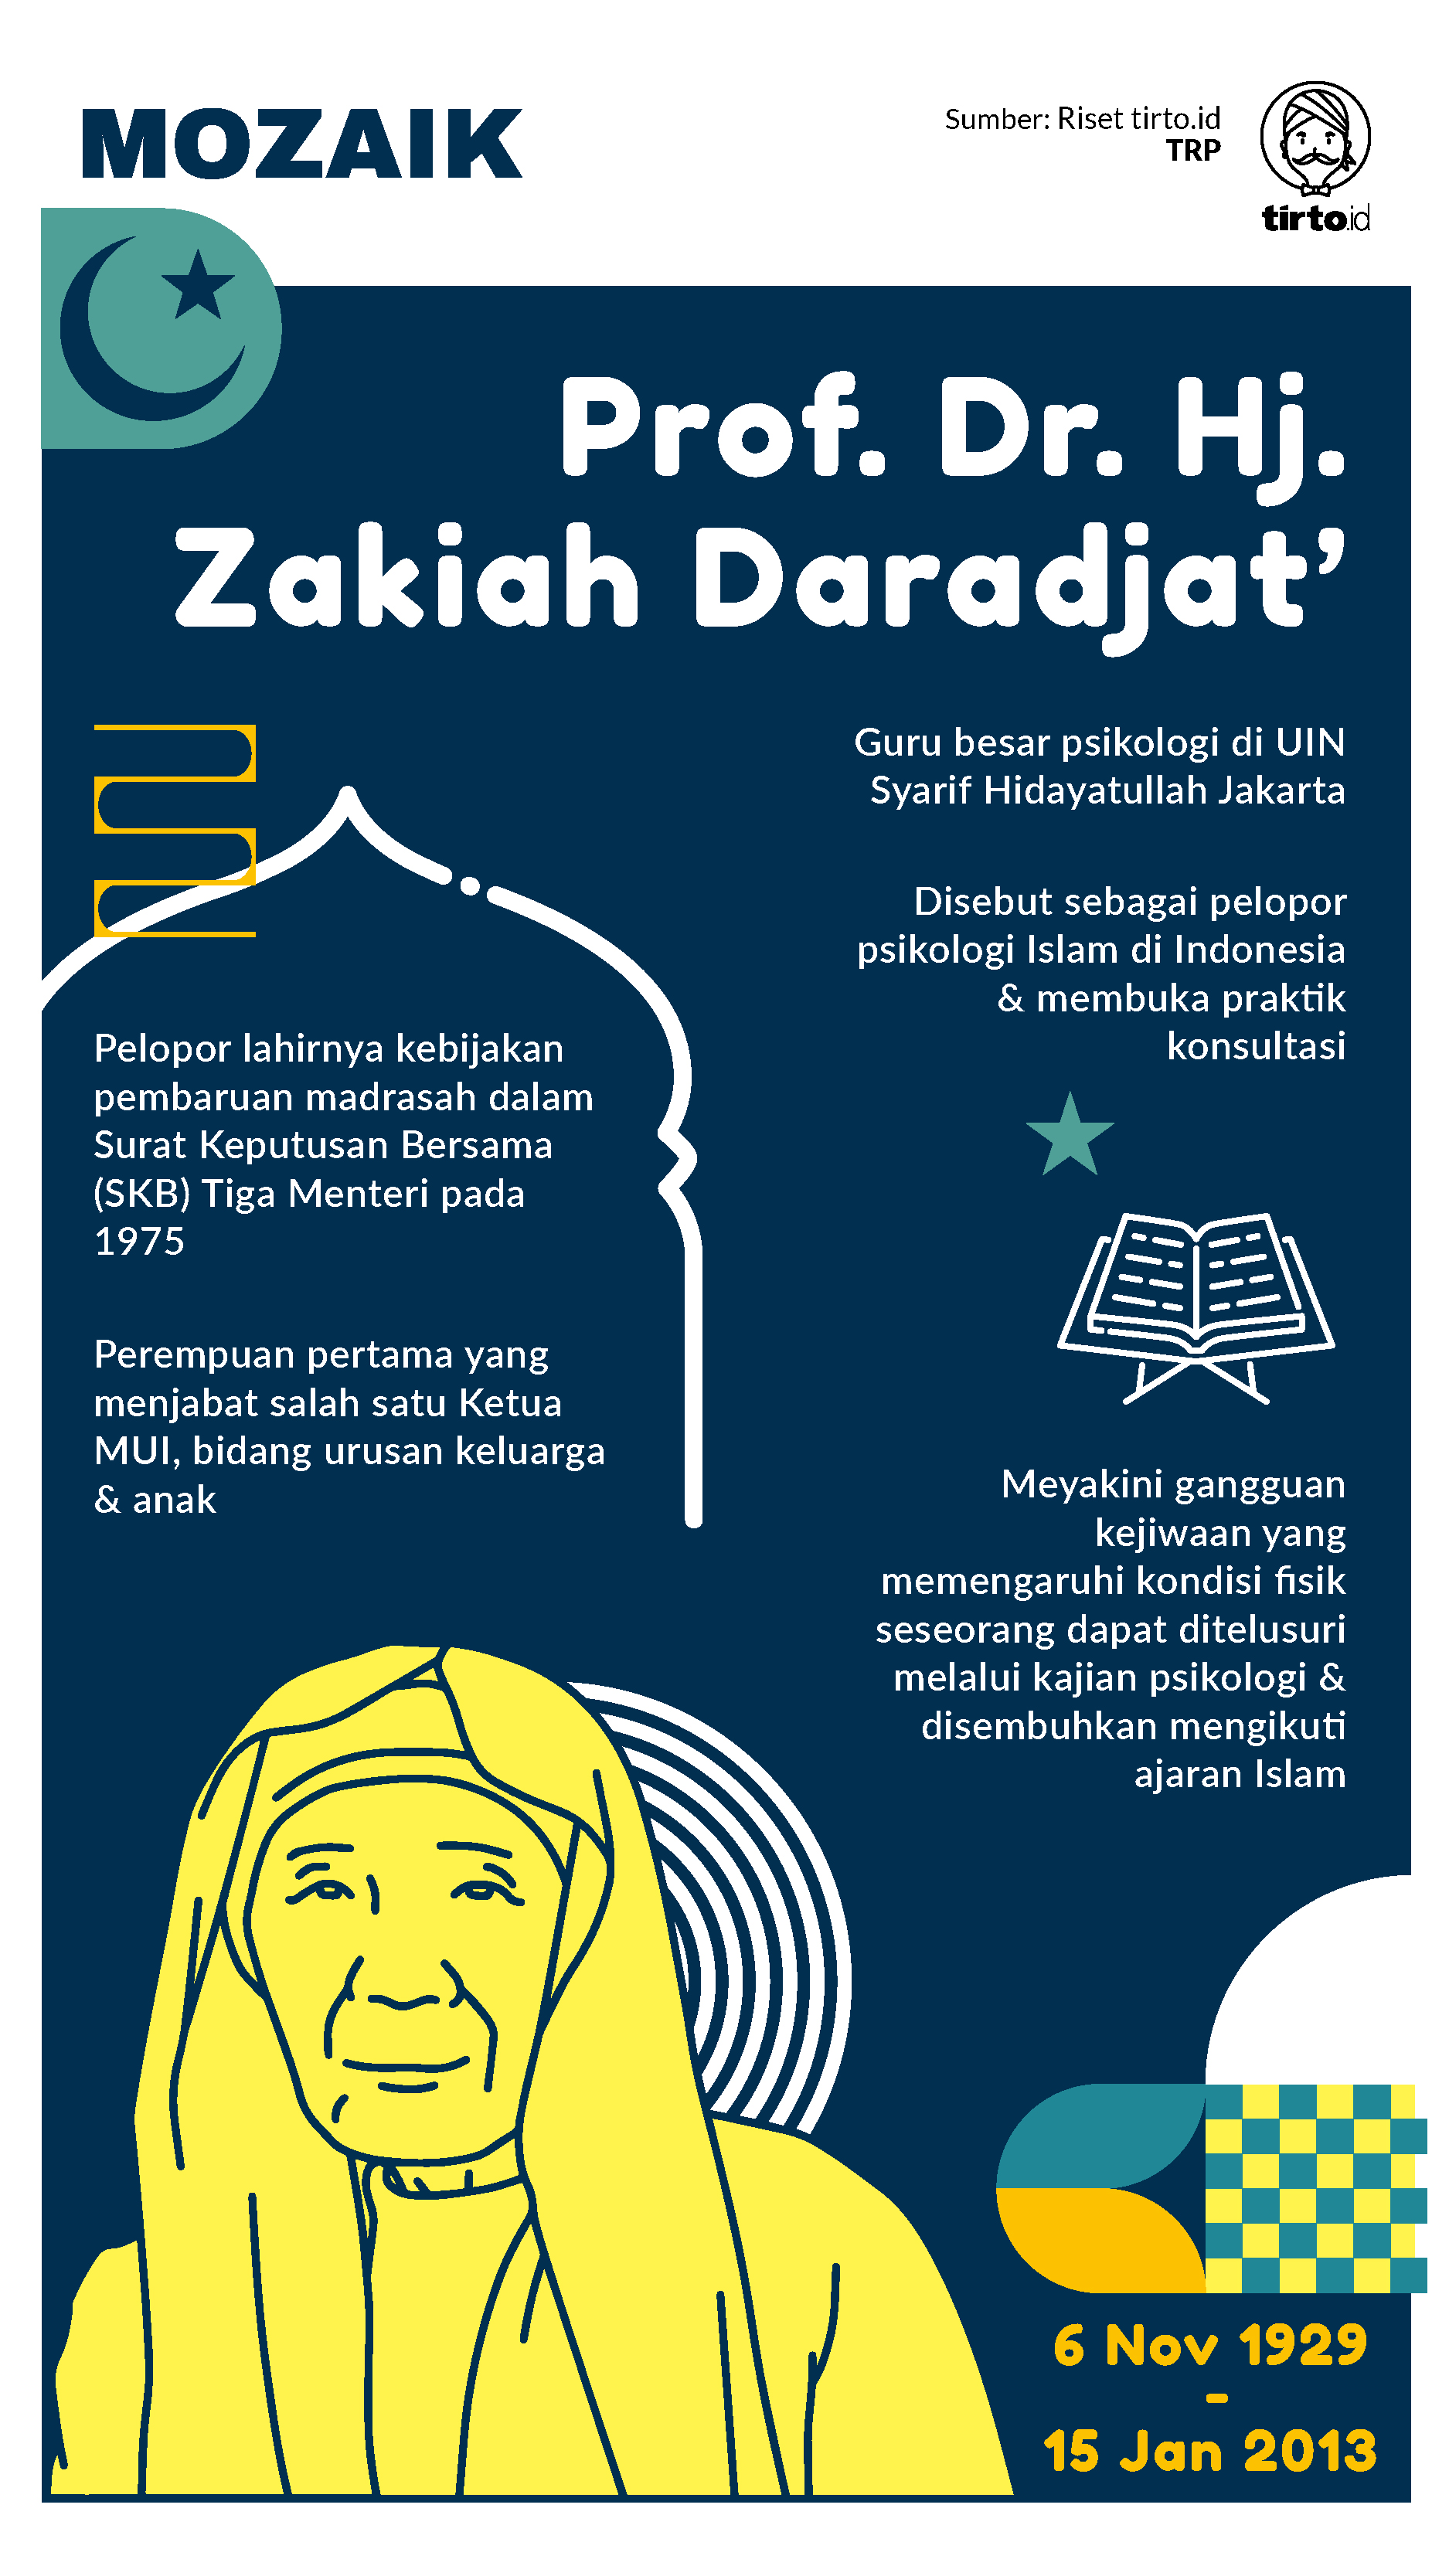 Infografik Mozaik Zakiah Daradjat